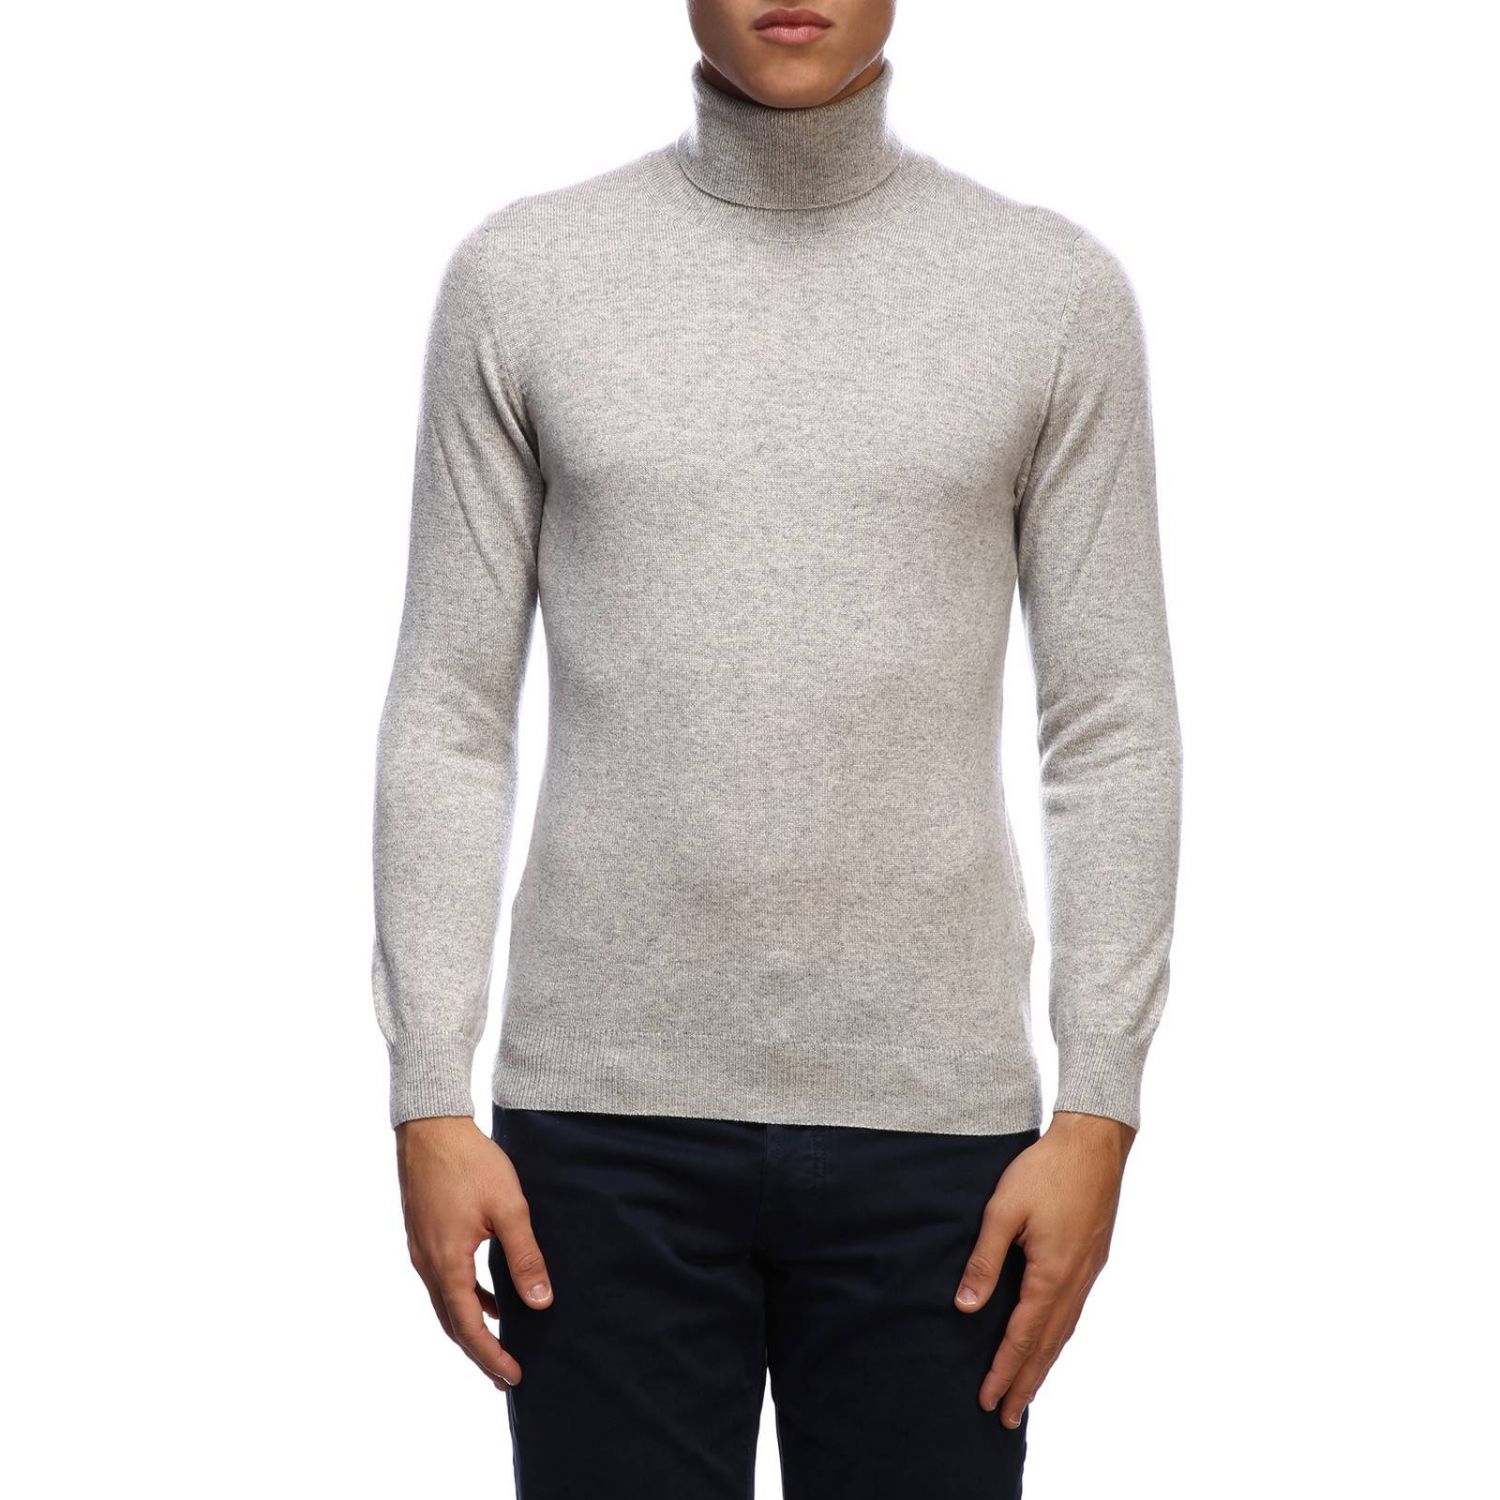 Osvaldo Bruni Outlet: Sweater men - Grey | Sweater Osvaldo Bruni SB144 ...